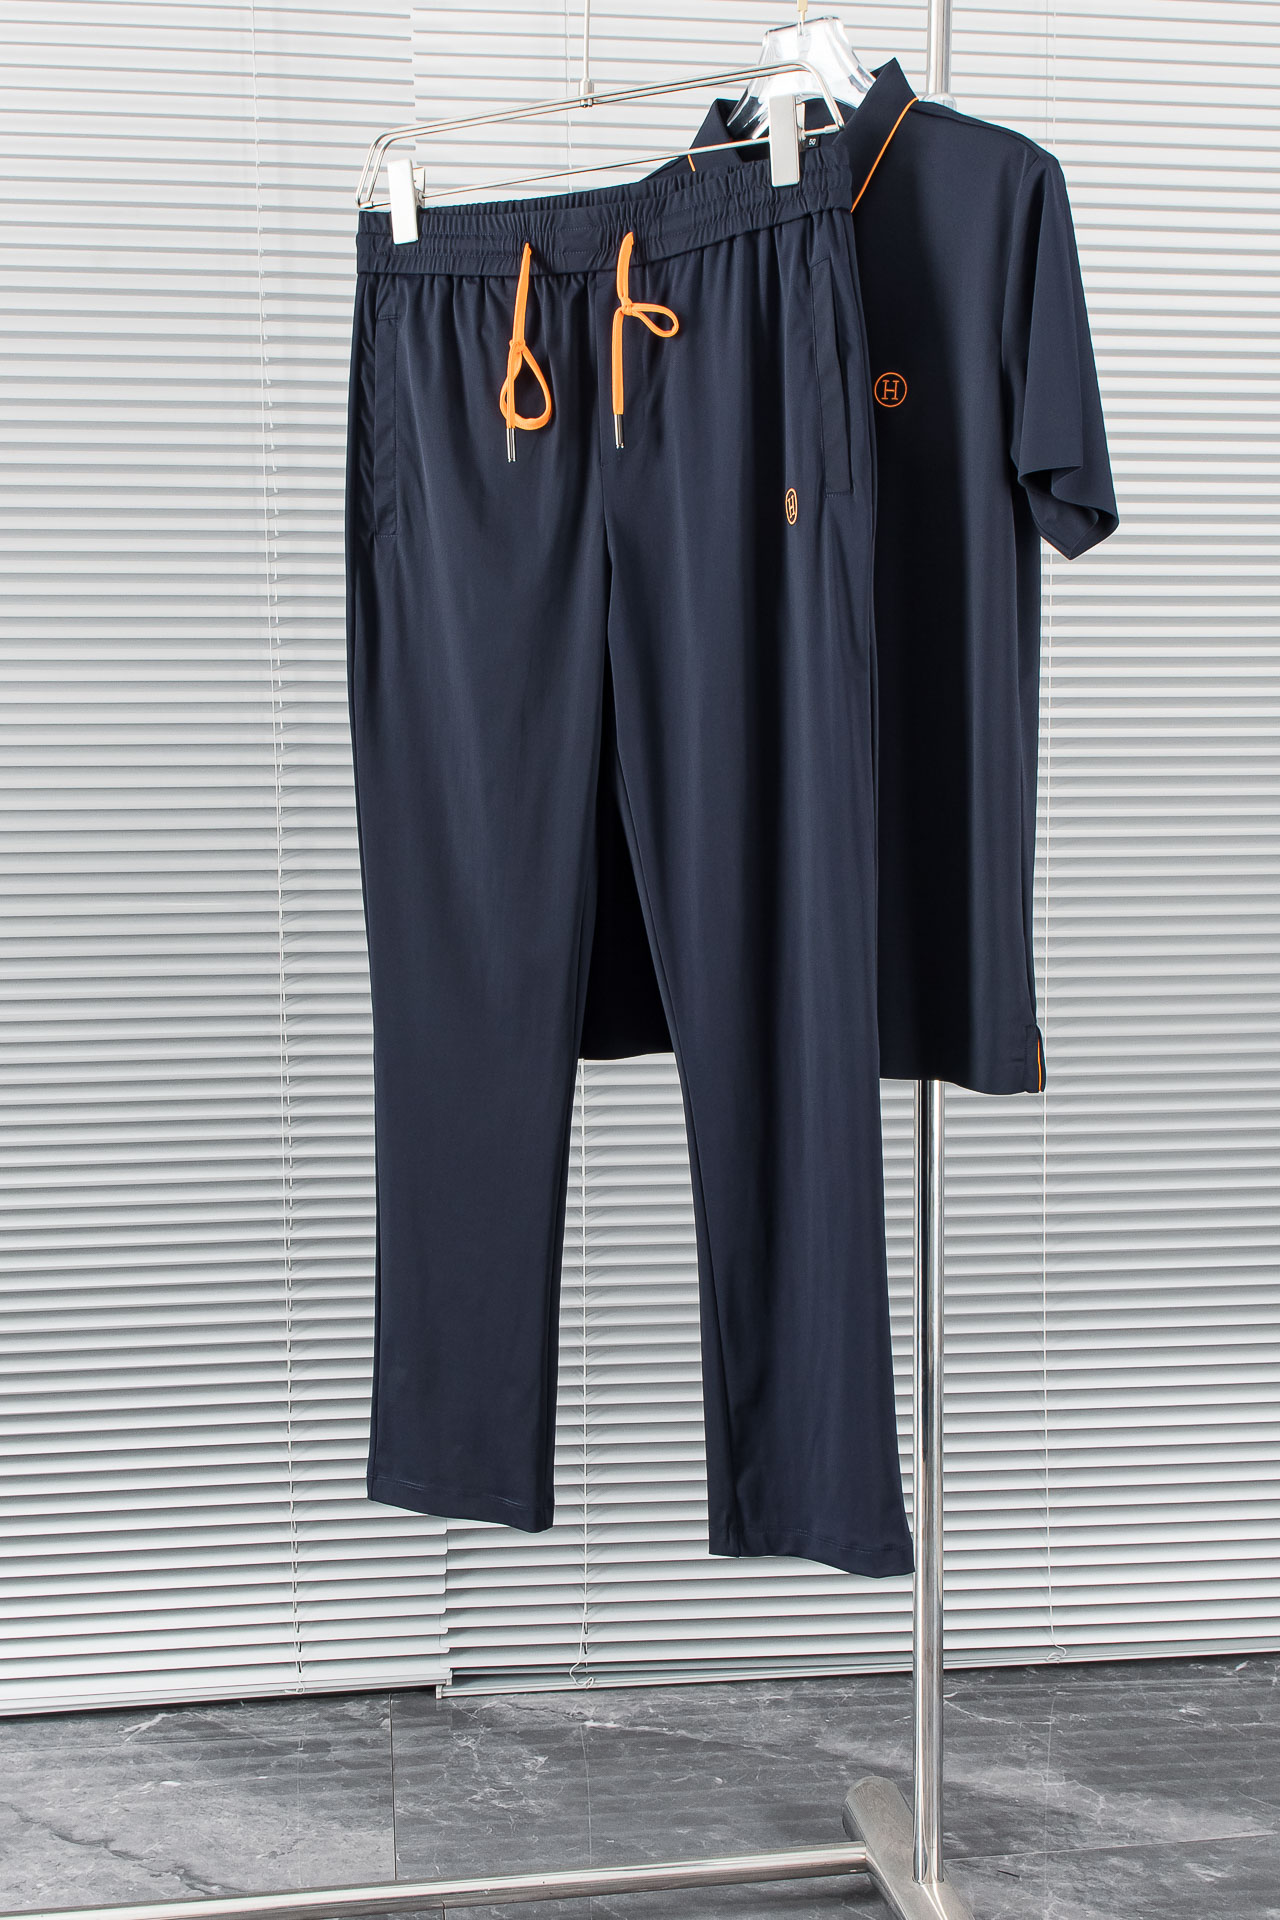 New#爱马仕*HERM*S*24ss春夏新品套装#[Polo短袖+长裤]进口冰丝面料手感和回弹性都很棒